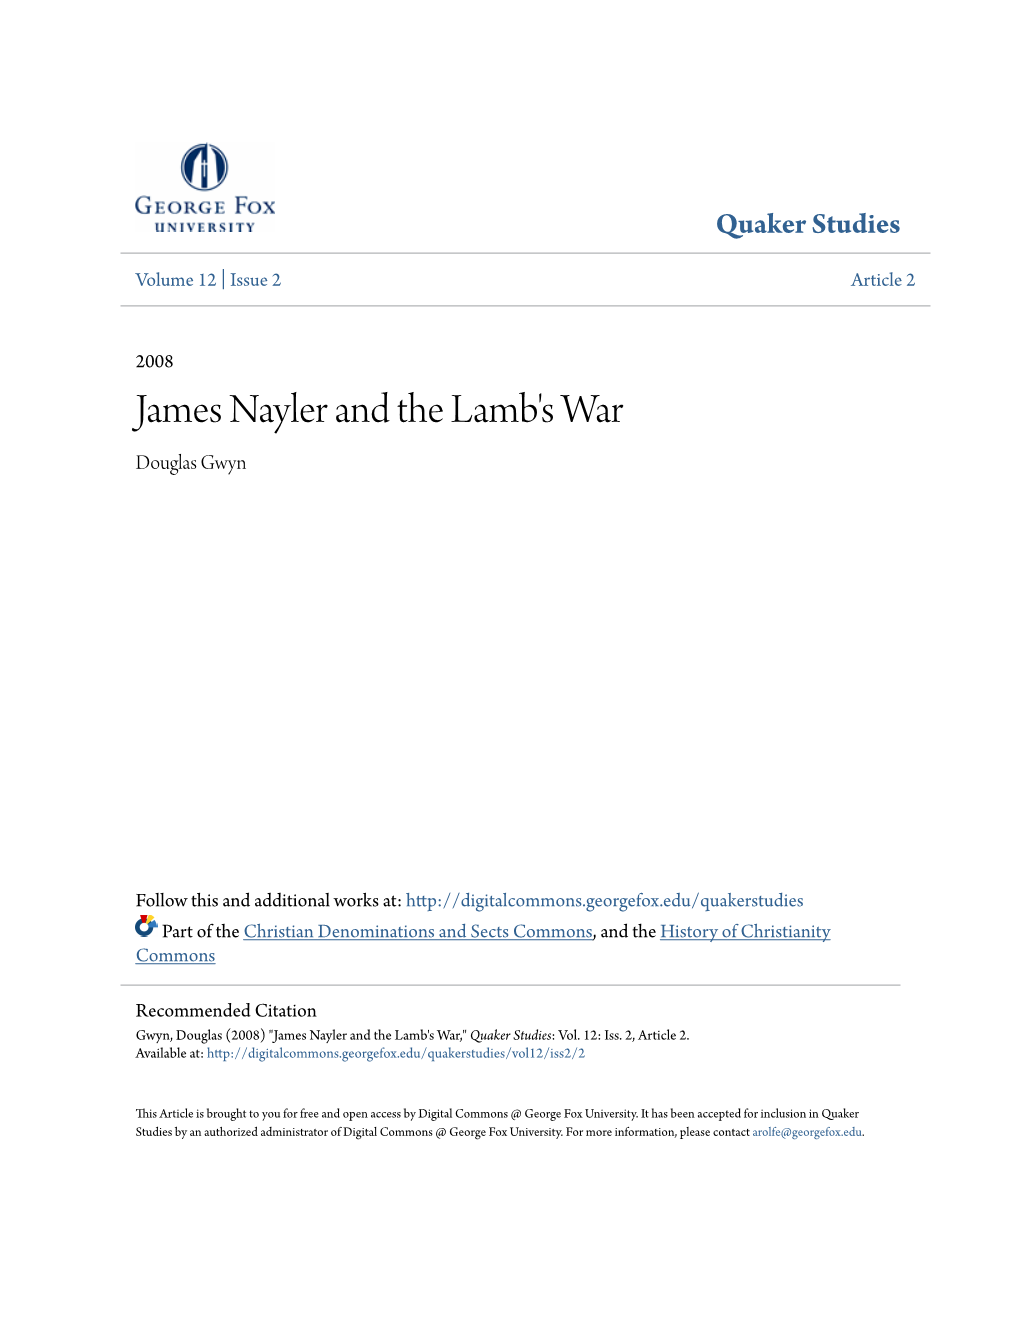 James Nayler and the Lamb's War Douglas Gwyn